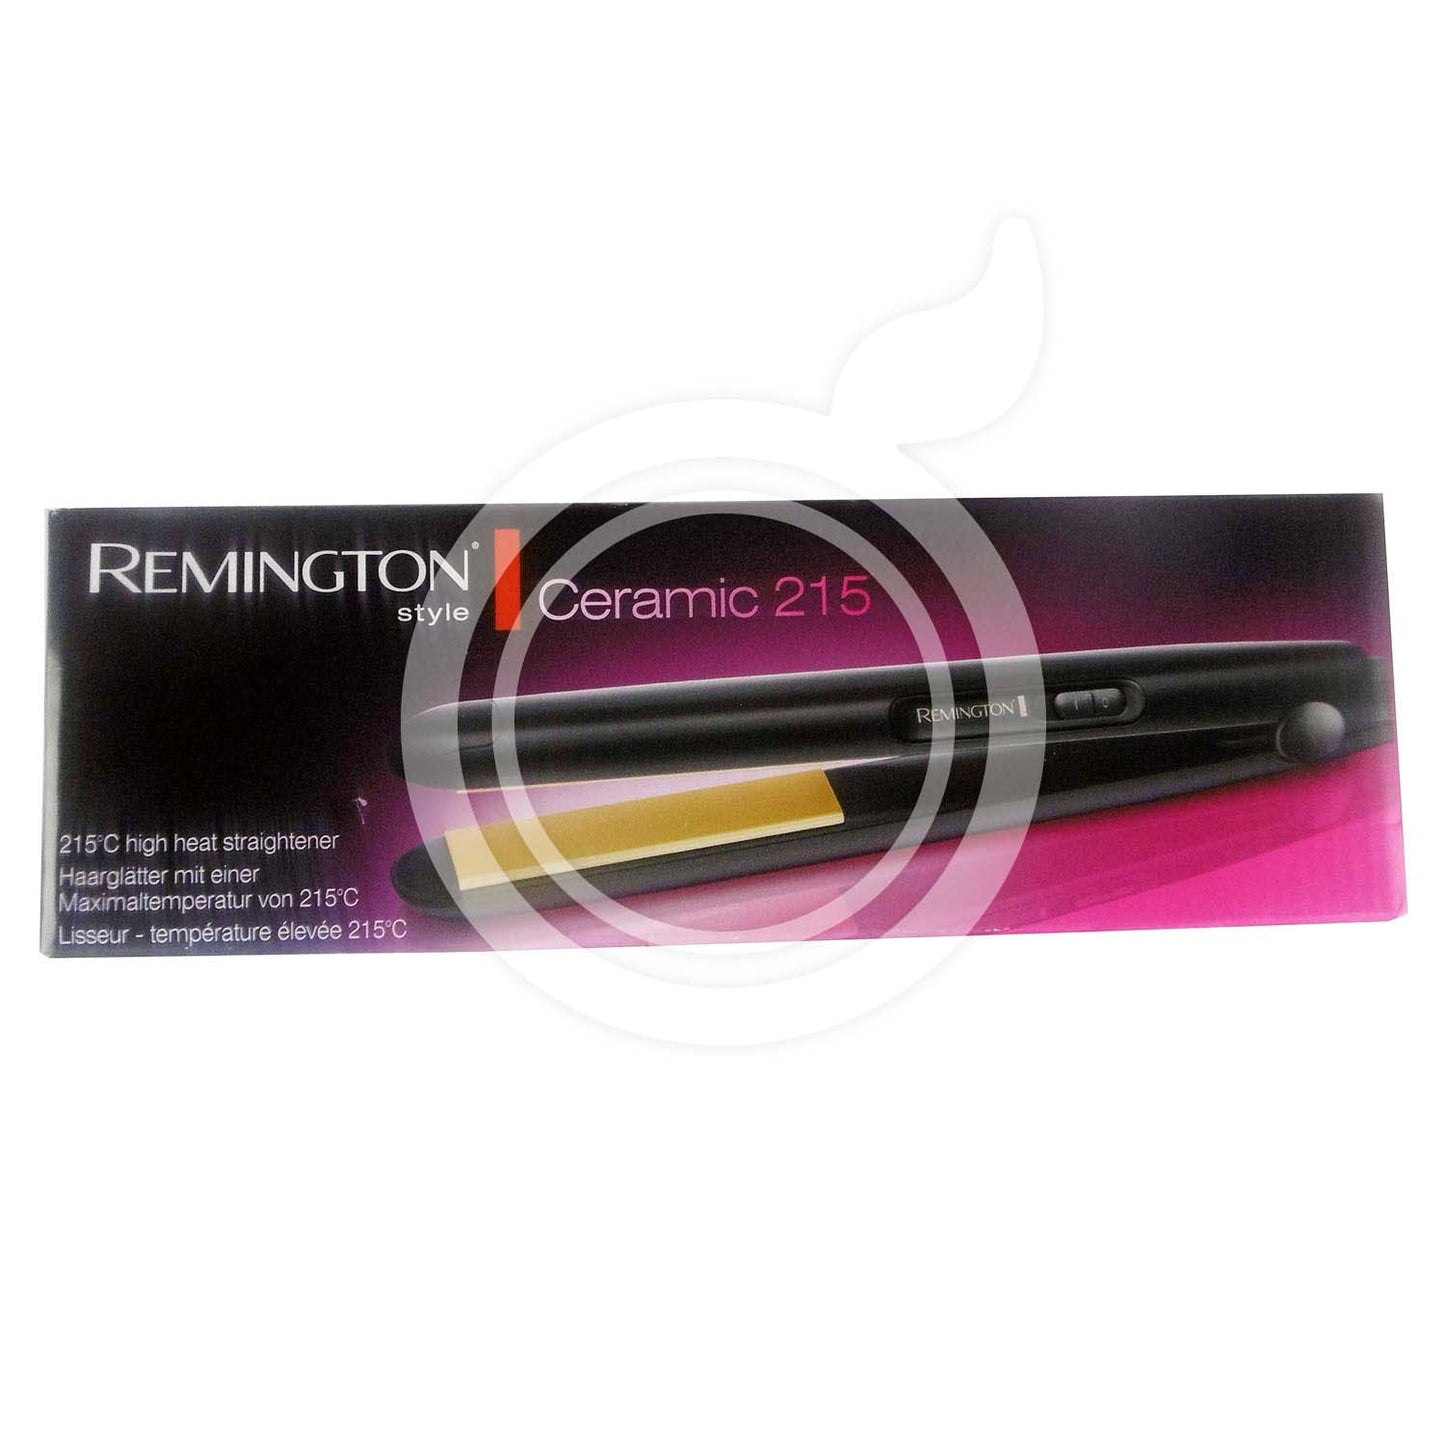 Remington - Ceramic 215 Hair Straightener